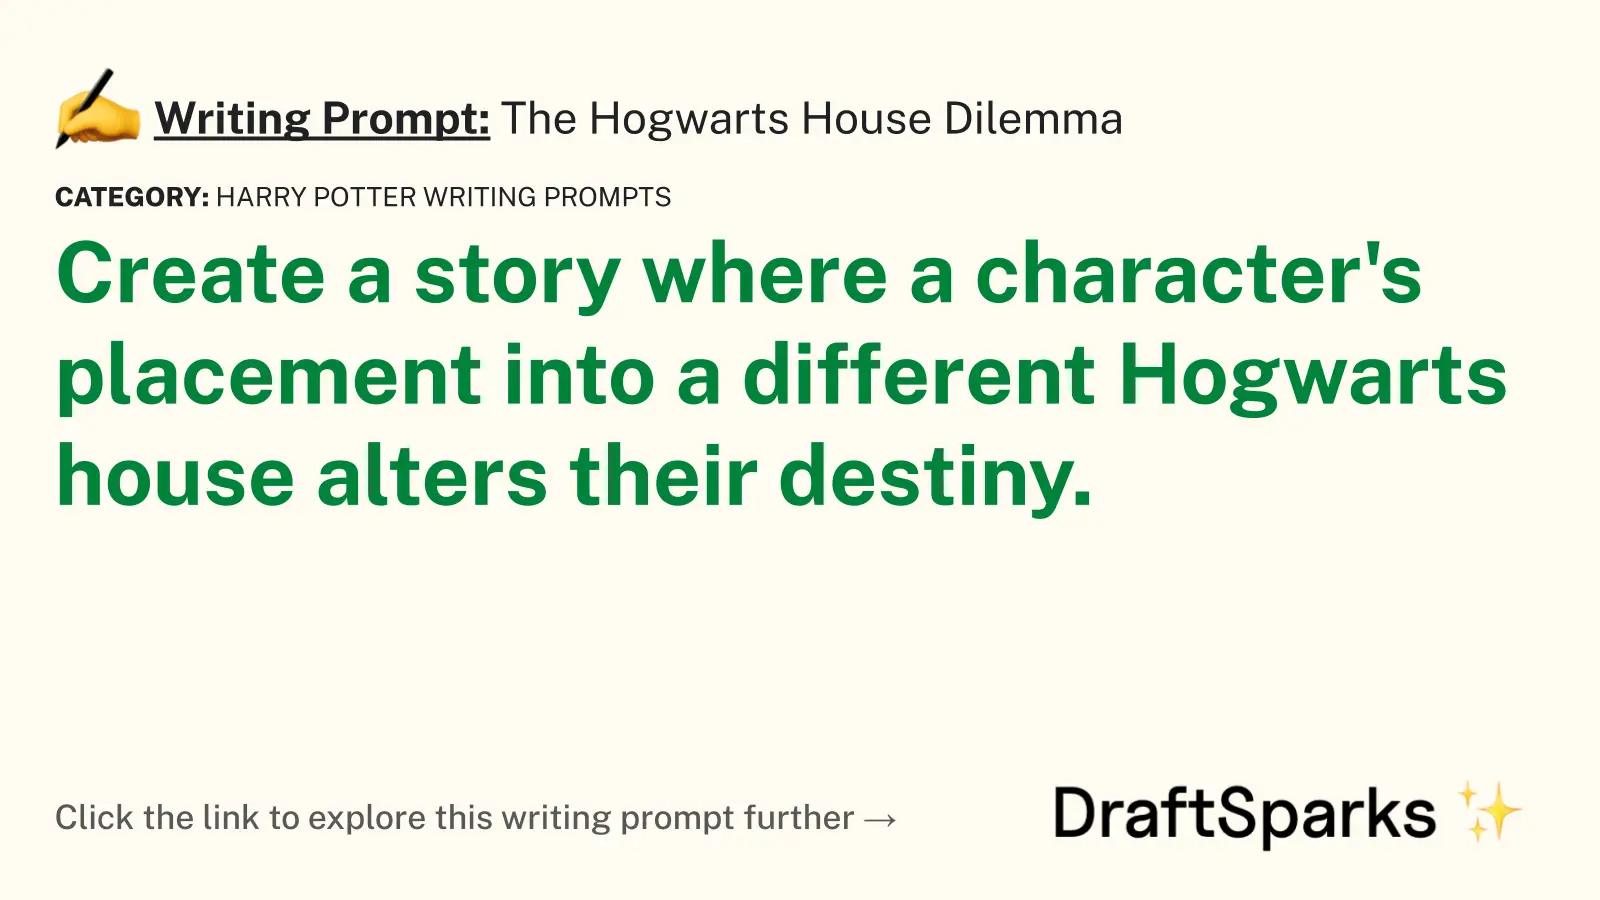 The Hogwarts House Dilemma